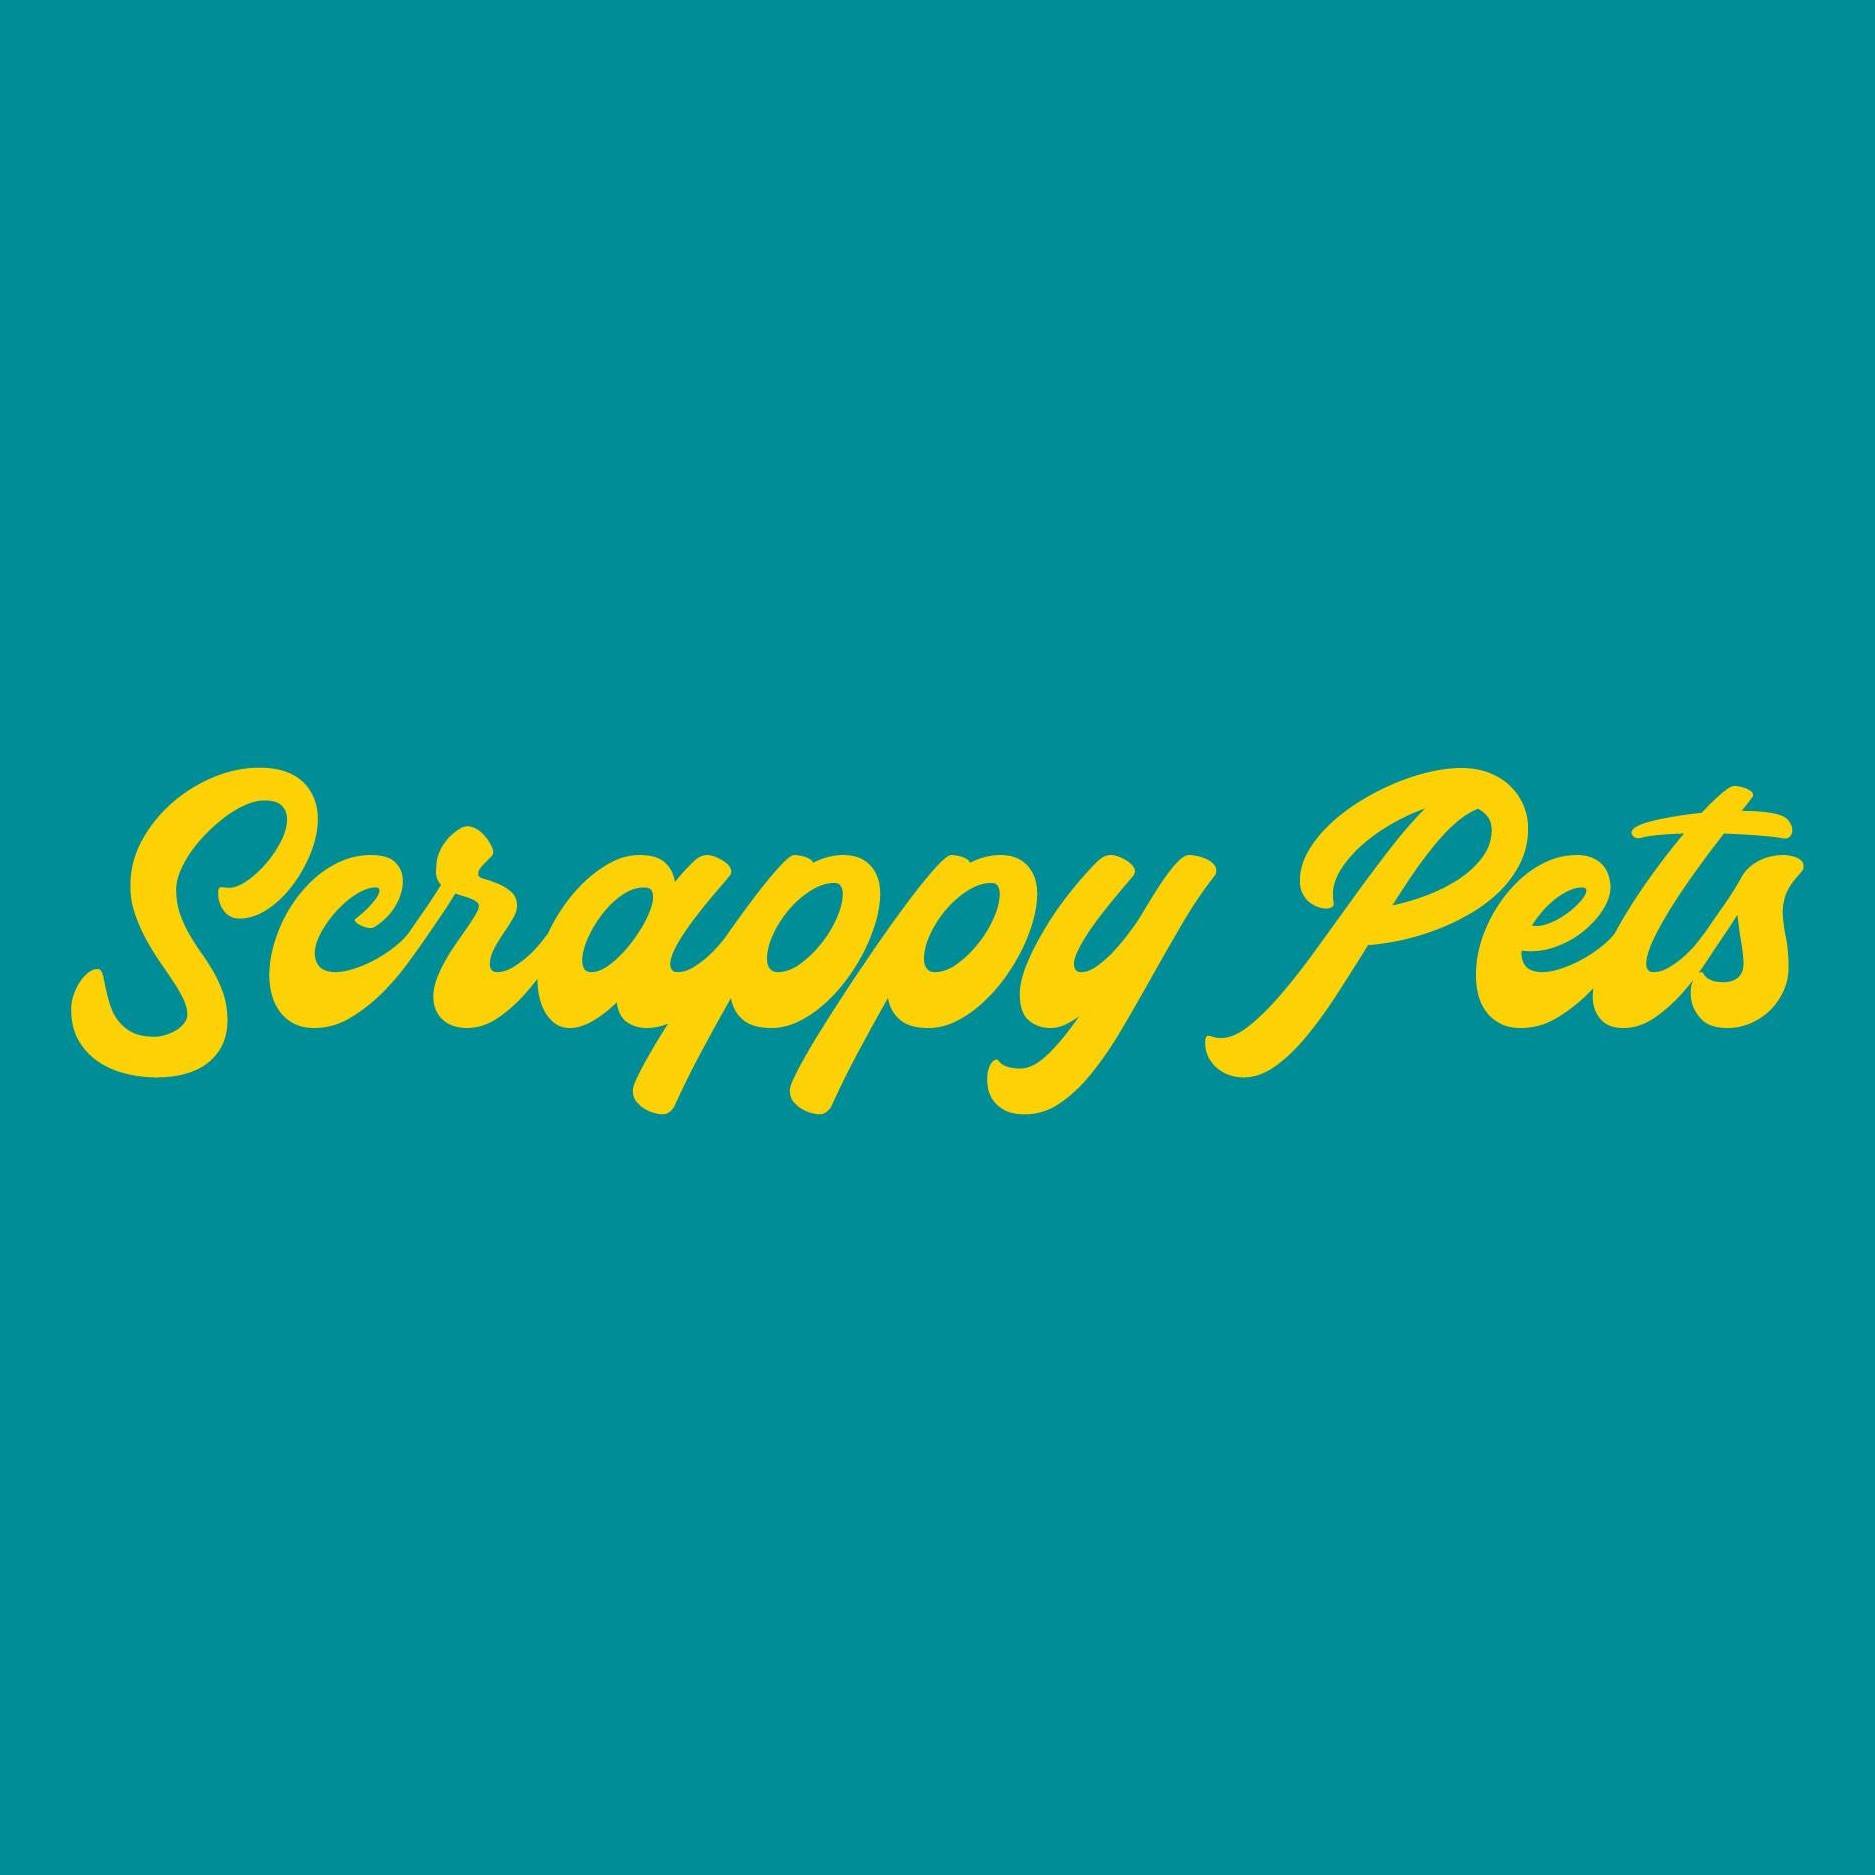 Company logo of Scrappy Pets